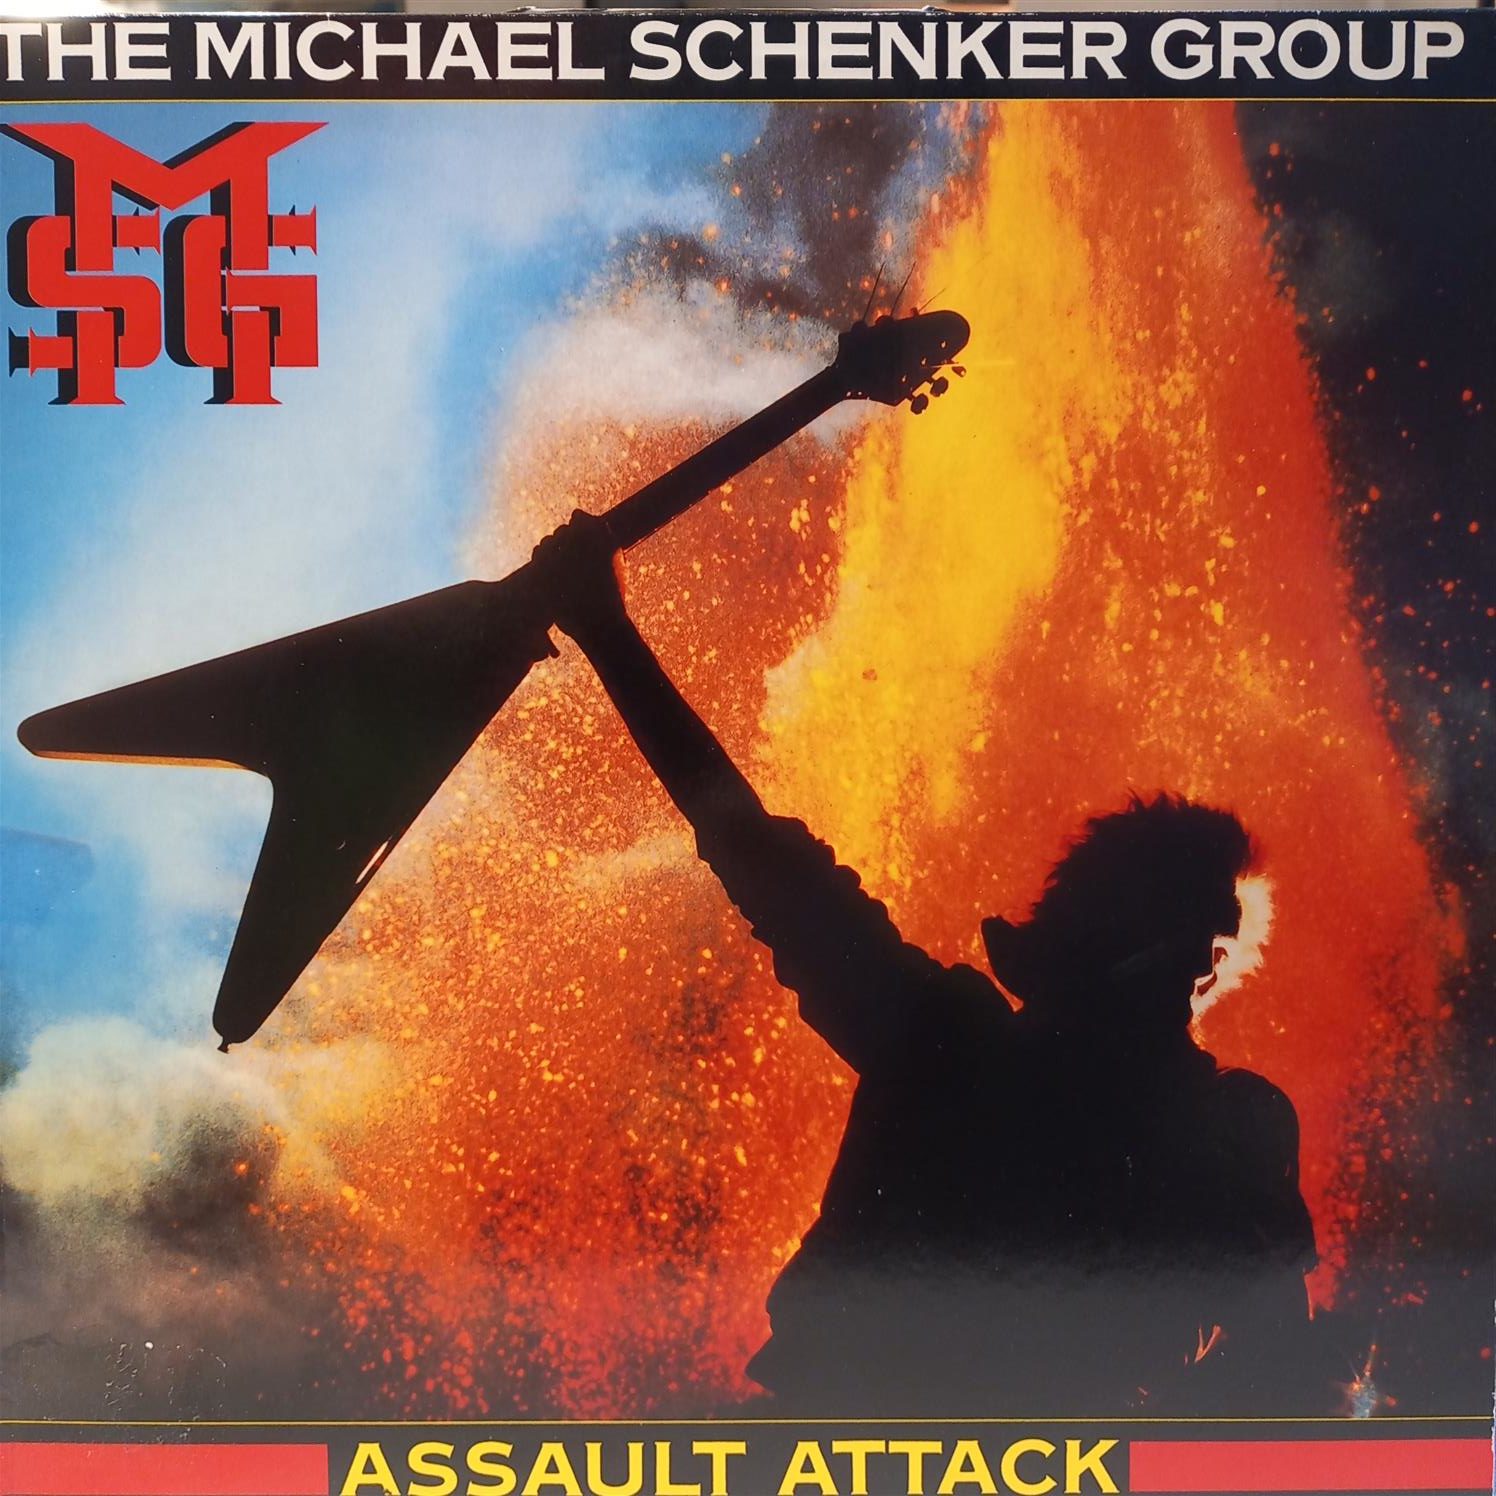 MICHAEL SCHENKER GROUP – ASSAULT ATTACK ON